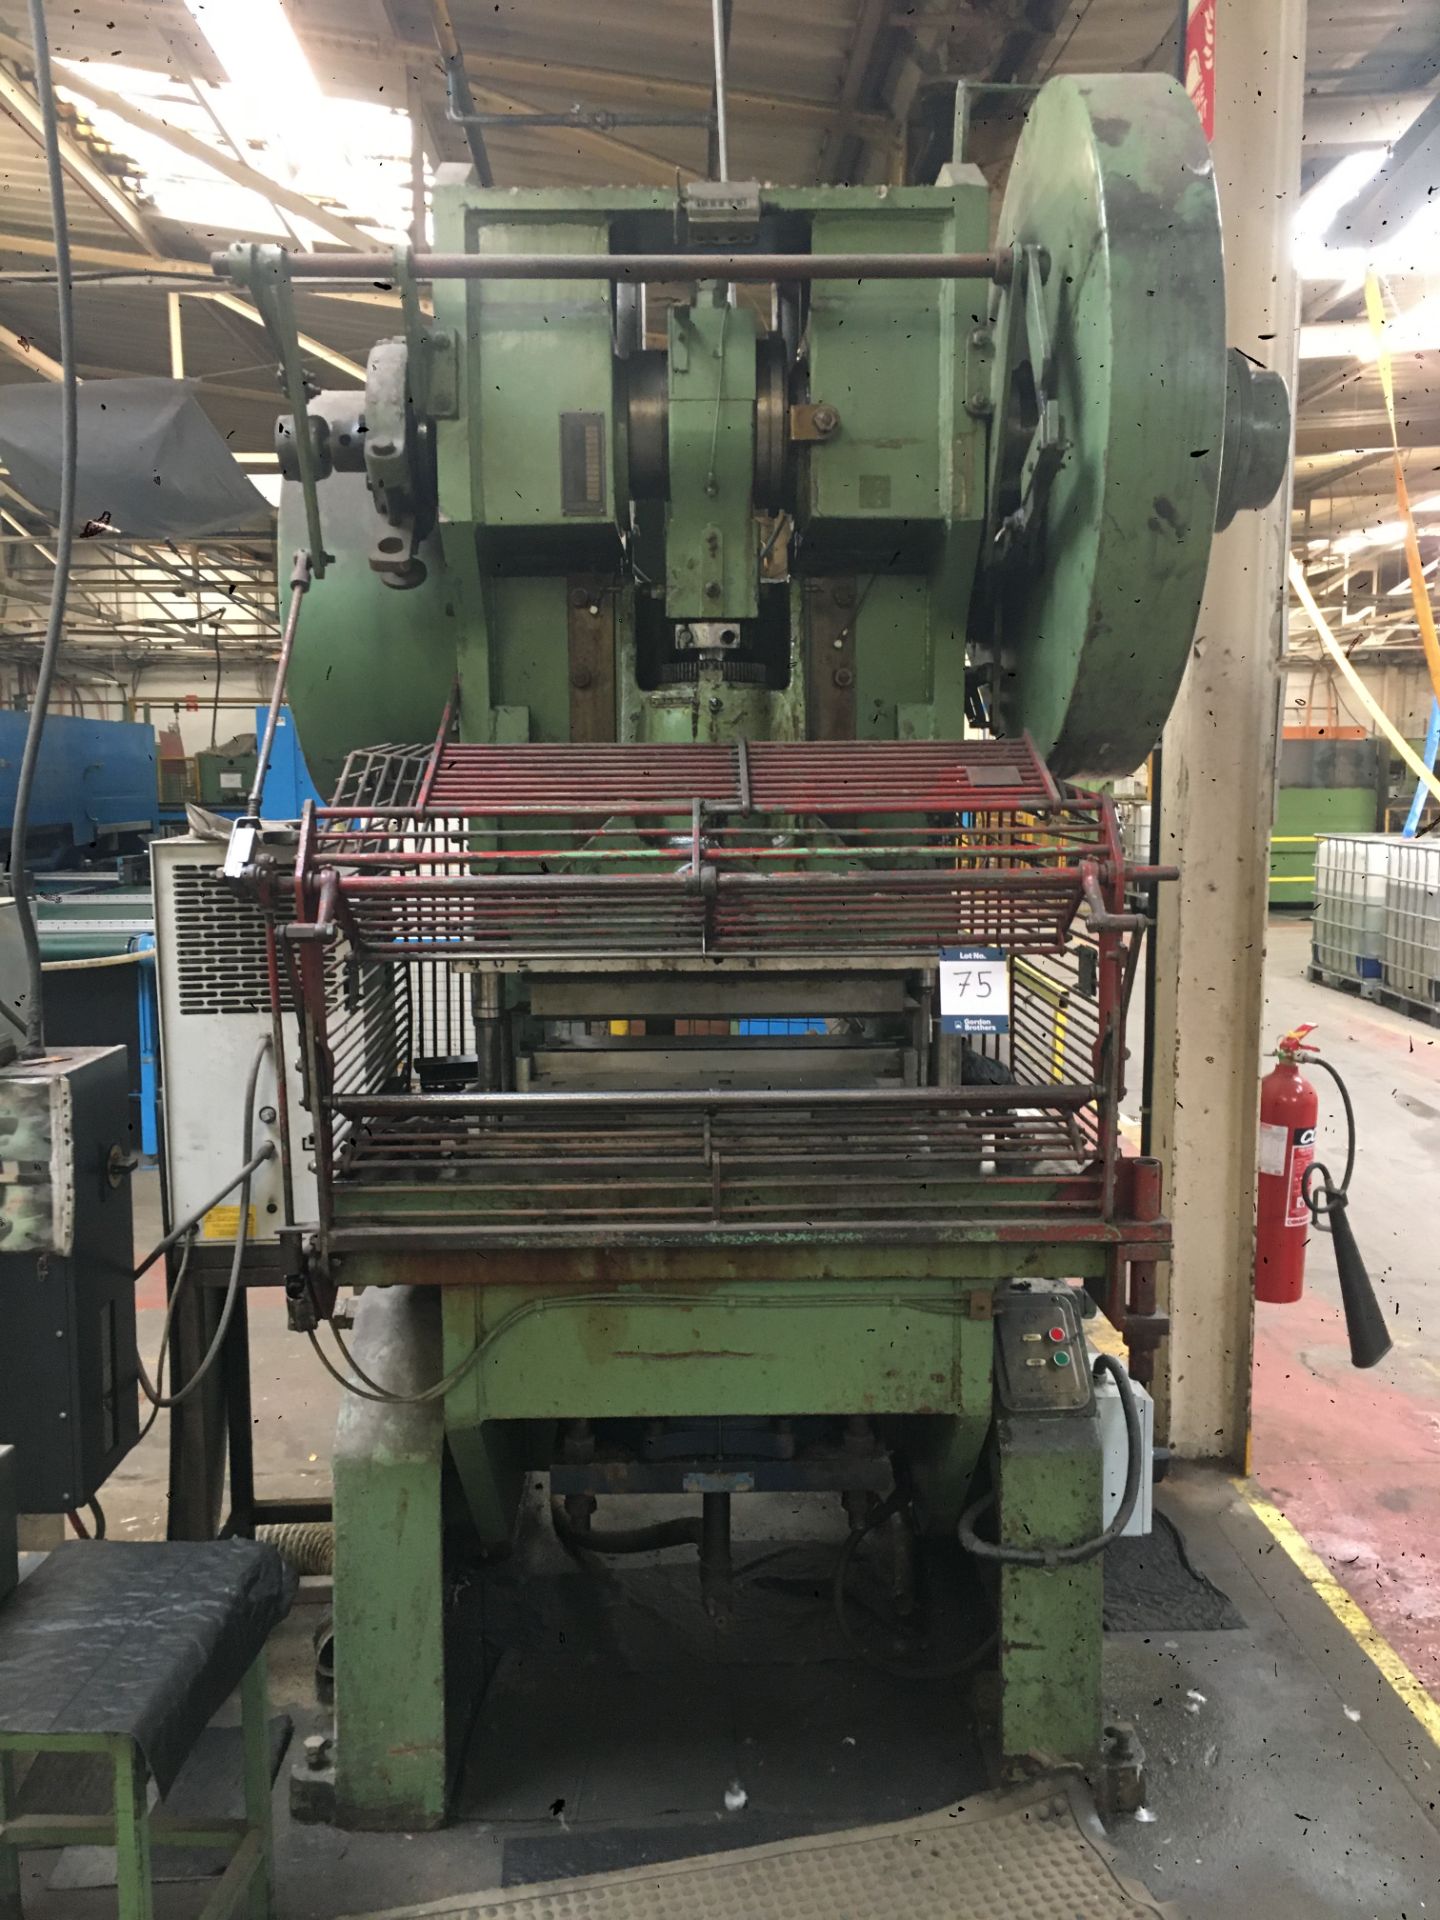 Rhodes RF75 mechanical press, Serial No. 16182, Ref. 204R, Capacity. 75 ton, Bed Size. 119cm x